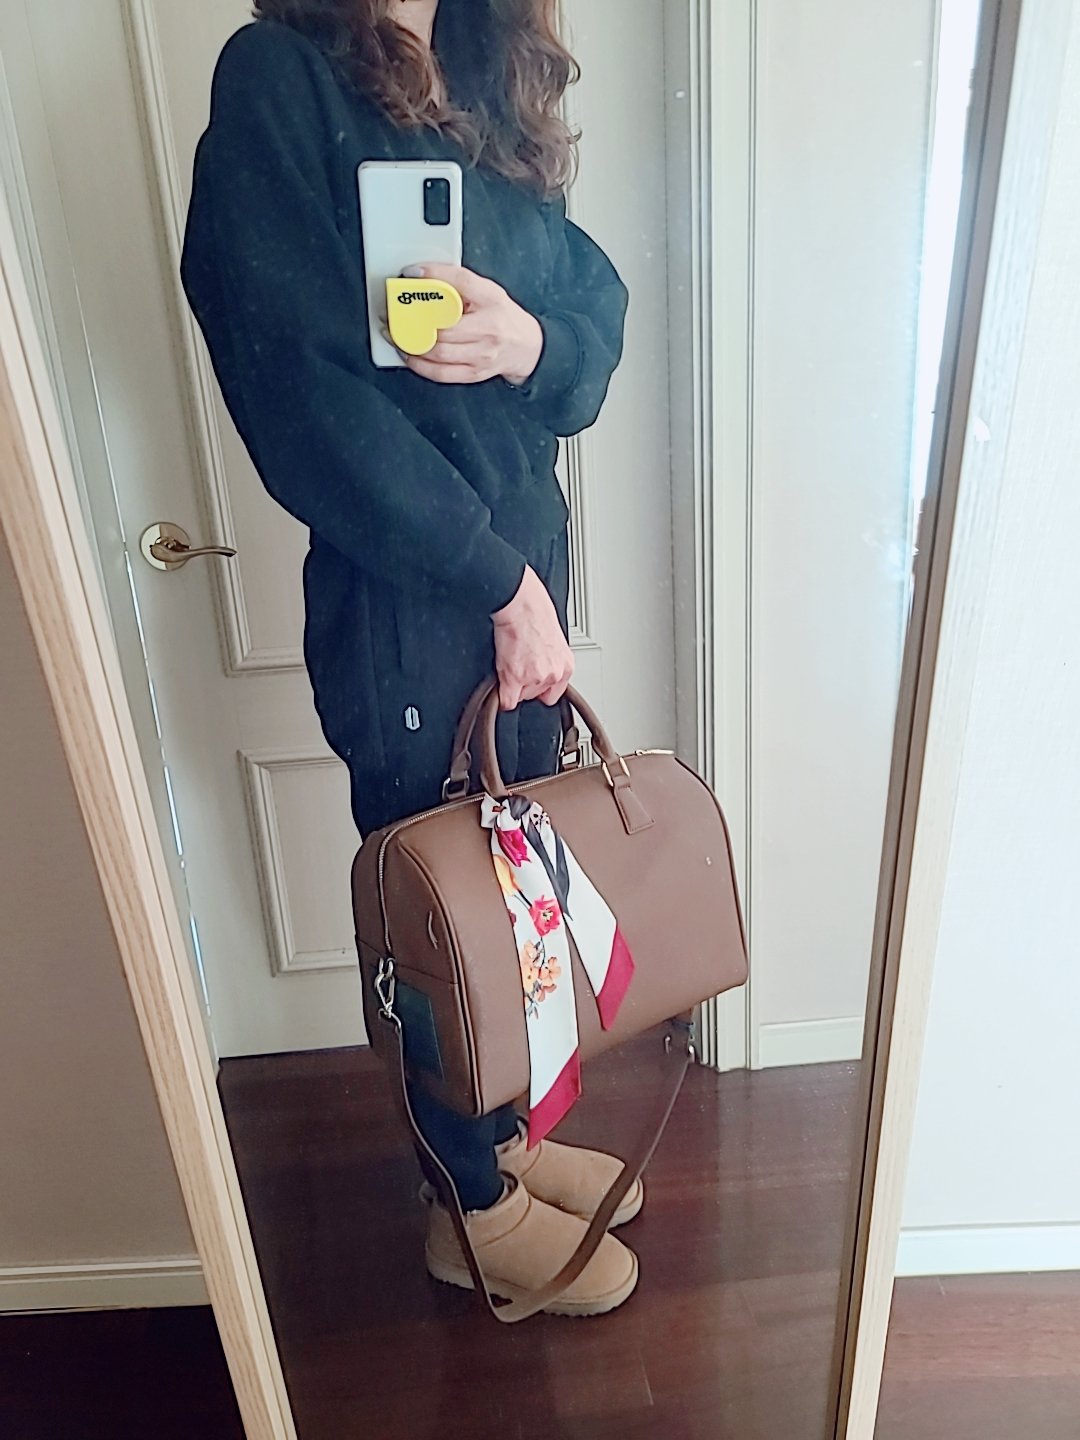 Taehyung Mute Boston Bag